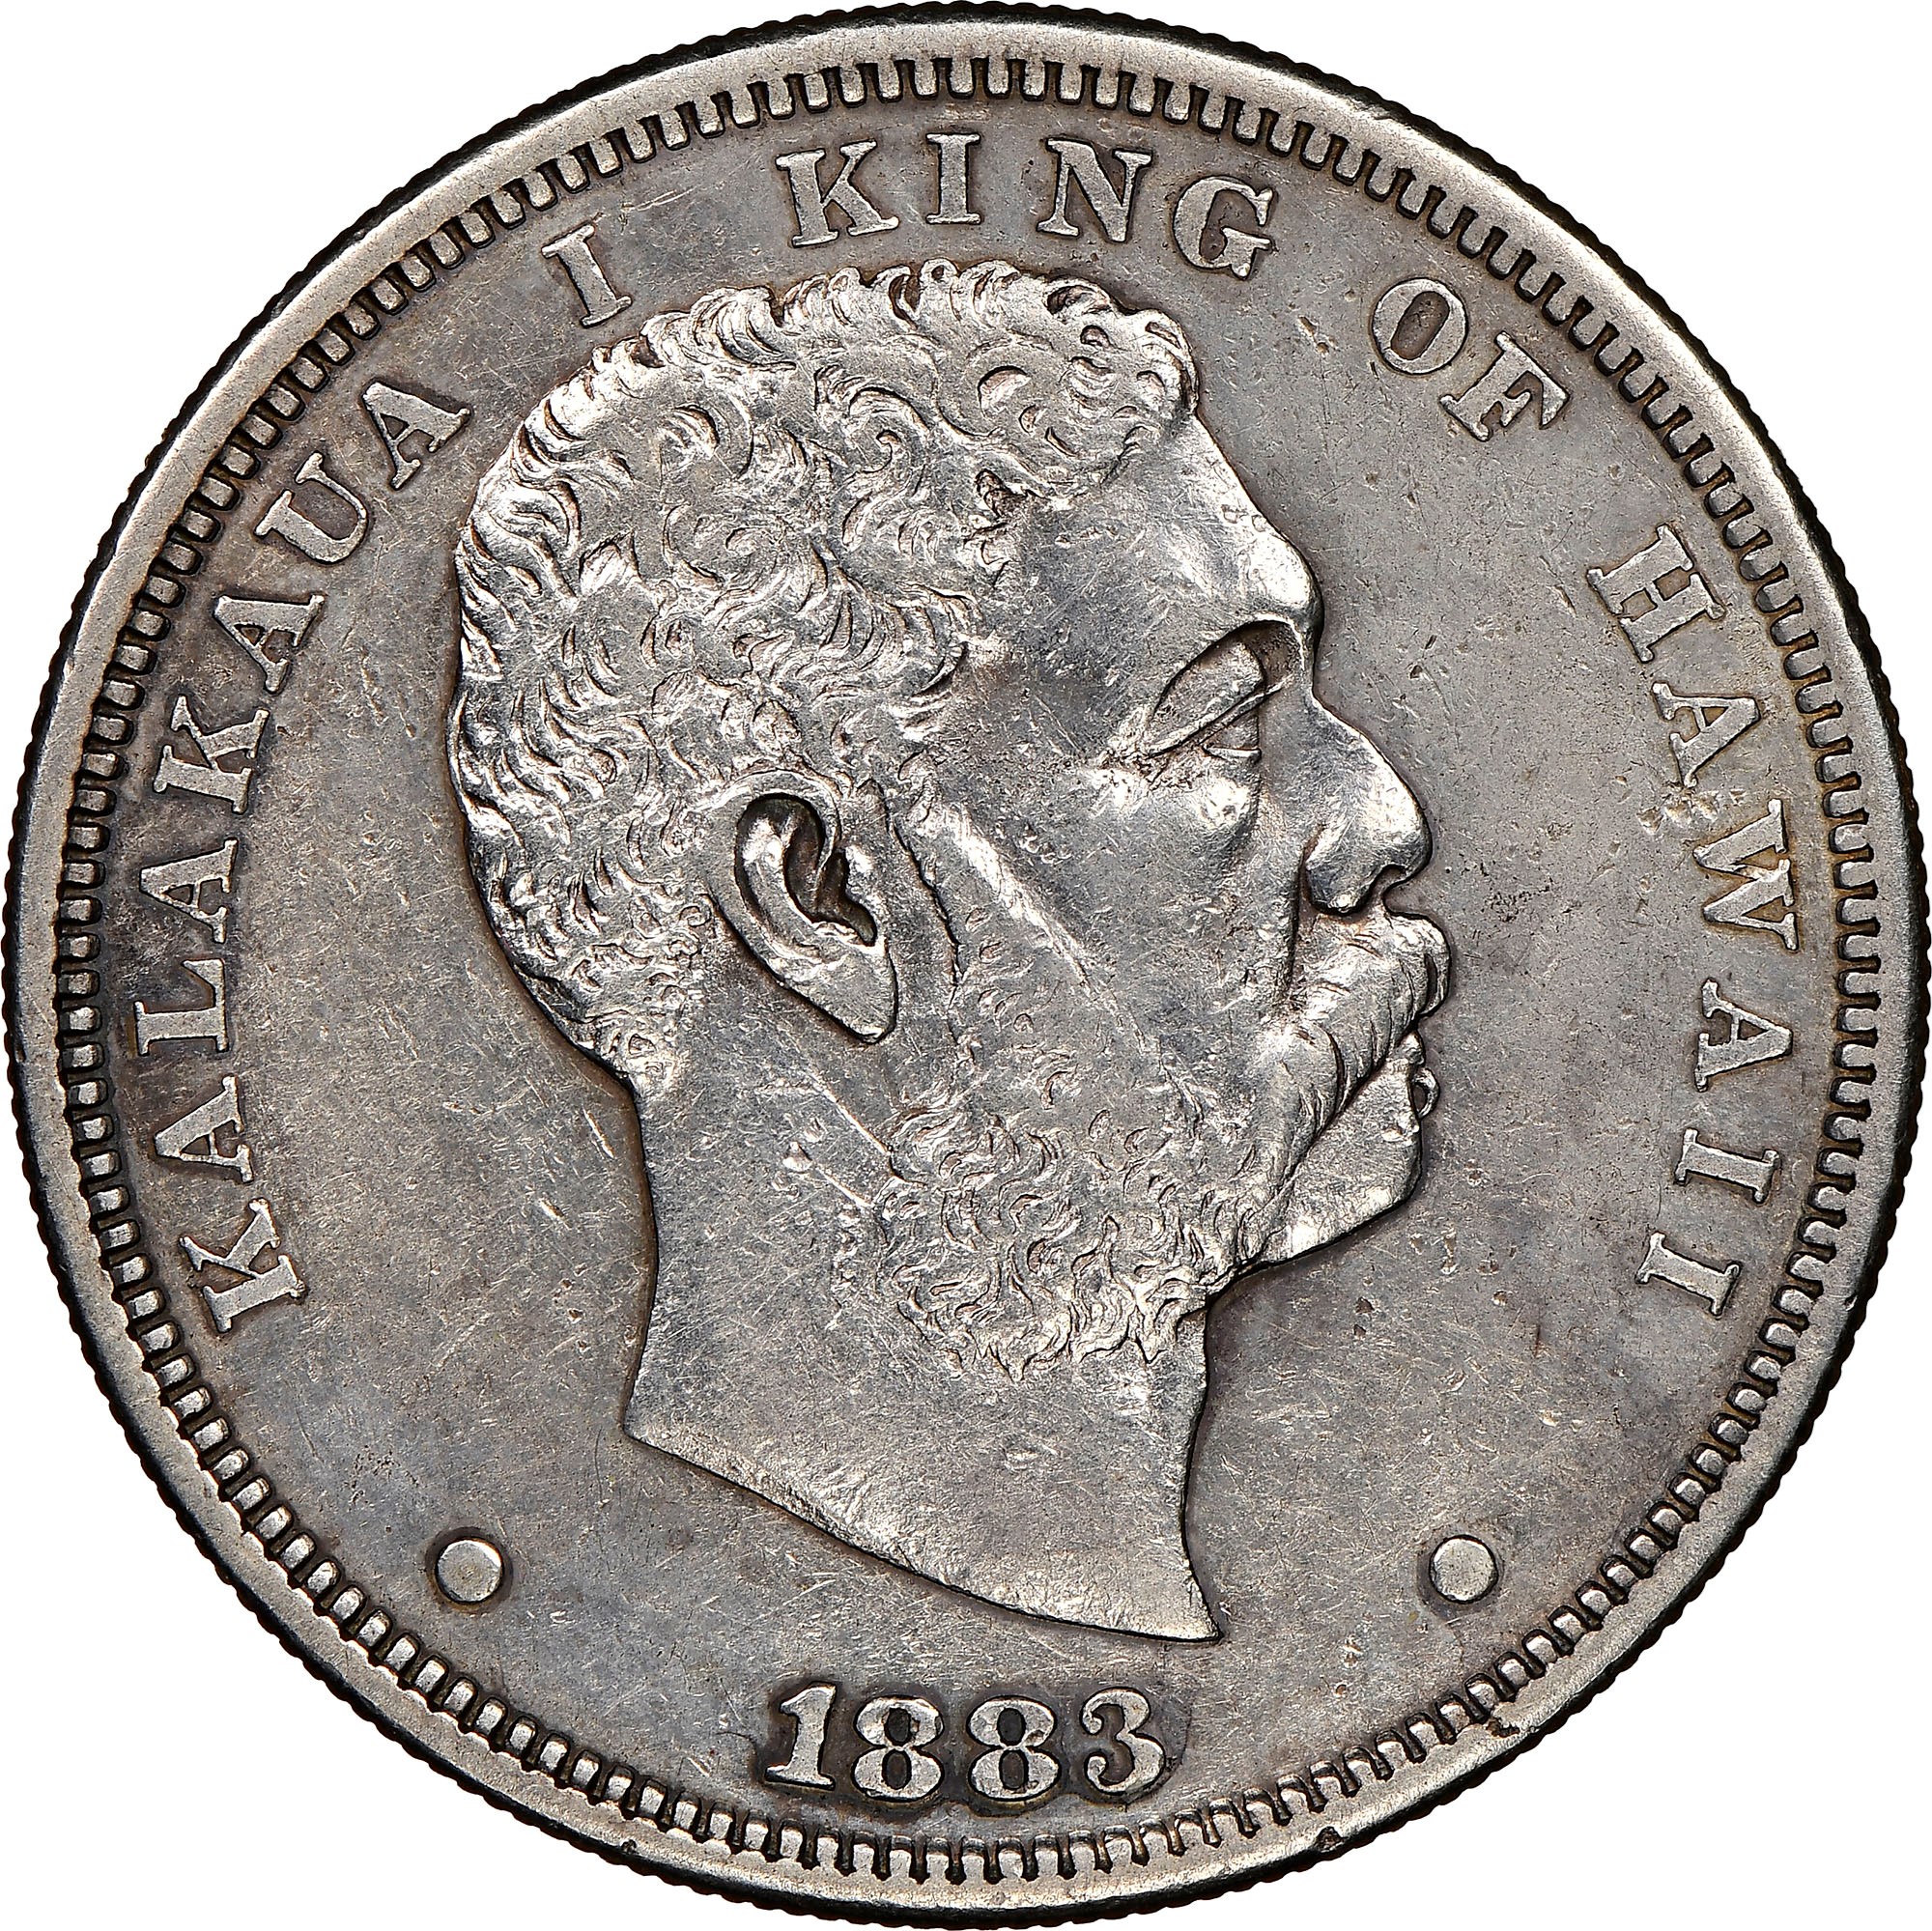 Coin Value: US Hawaii (King Kalakaua) 1/8, 1/4, 1/2, and 1 Dollar (Fakes are possible) 